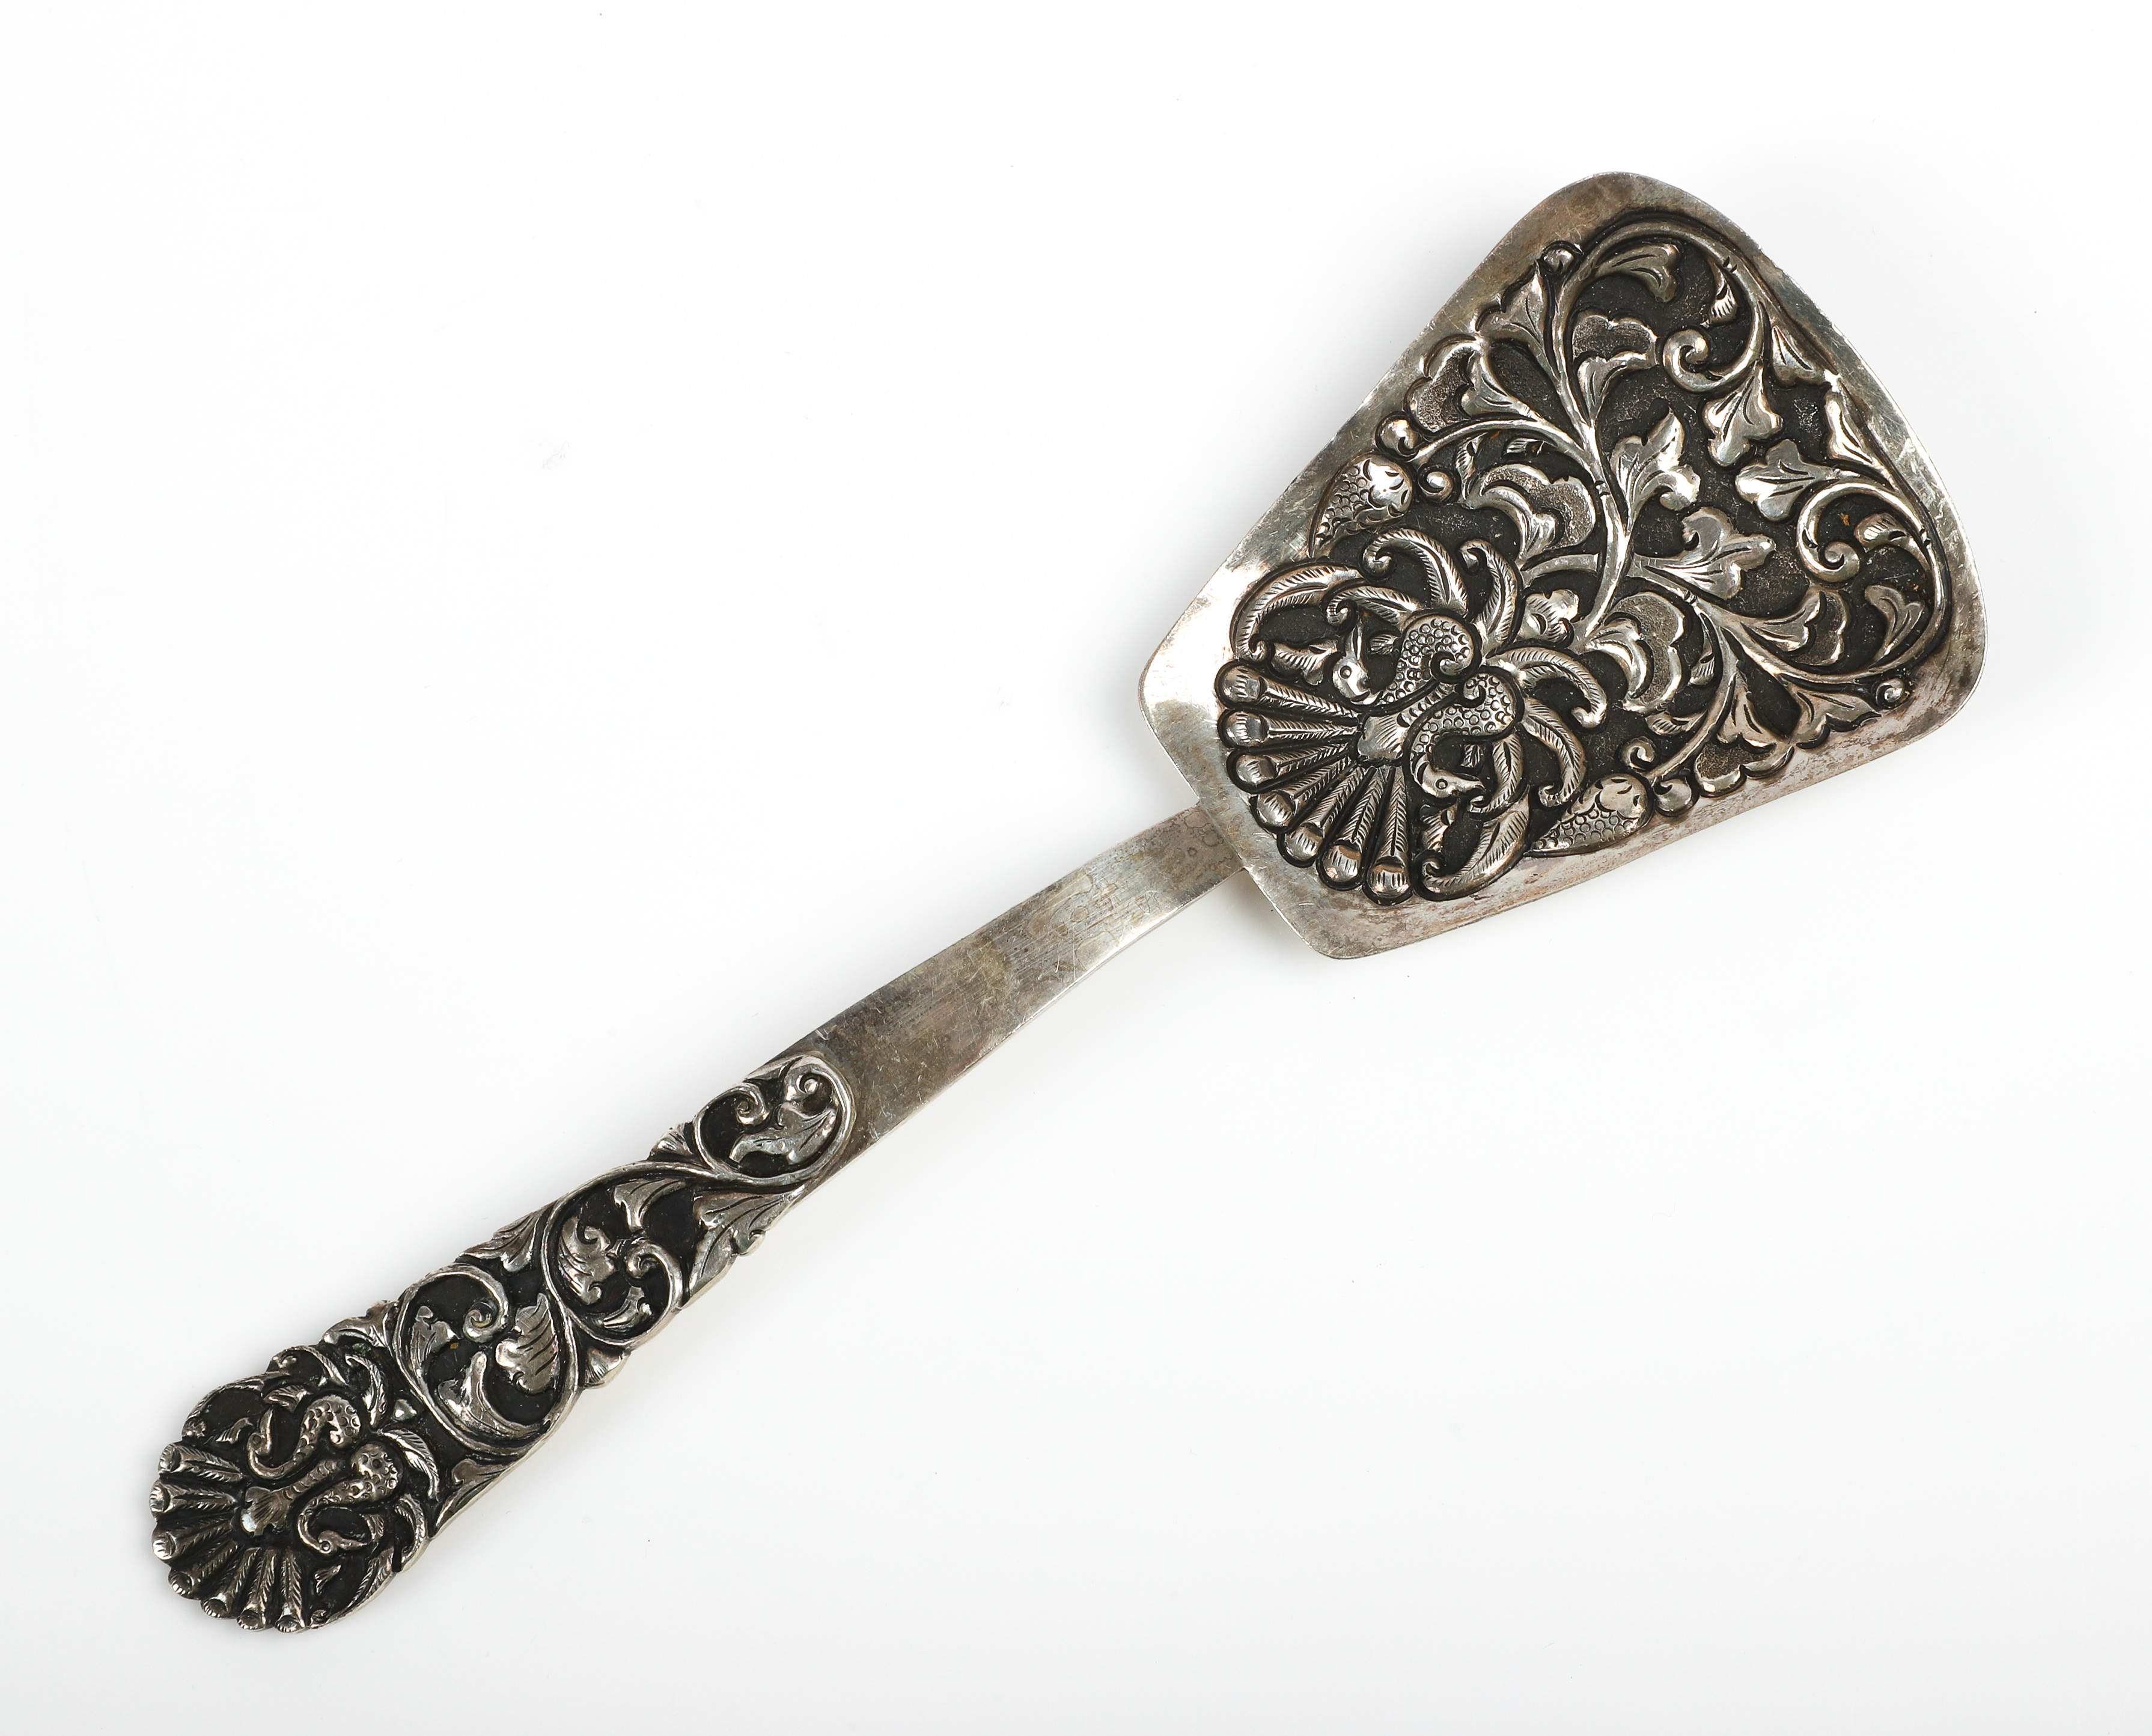 800 Silver spoon shovel, embossed